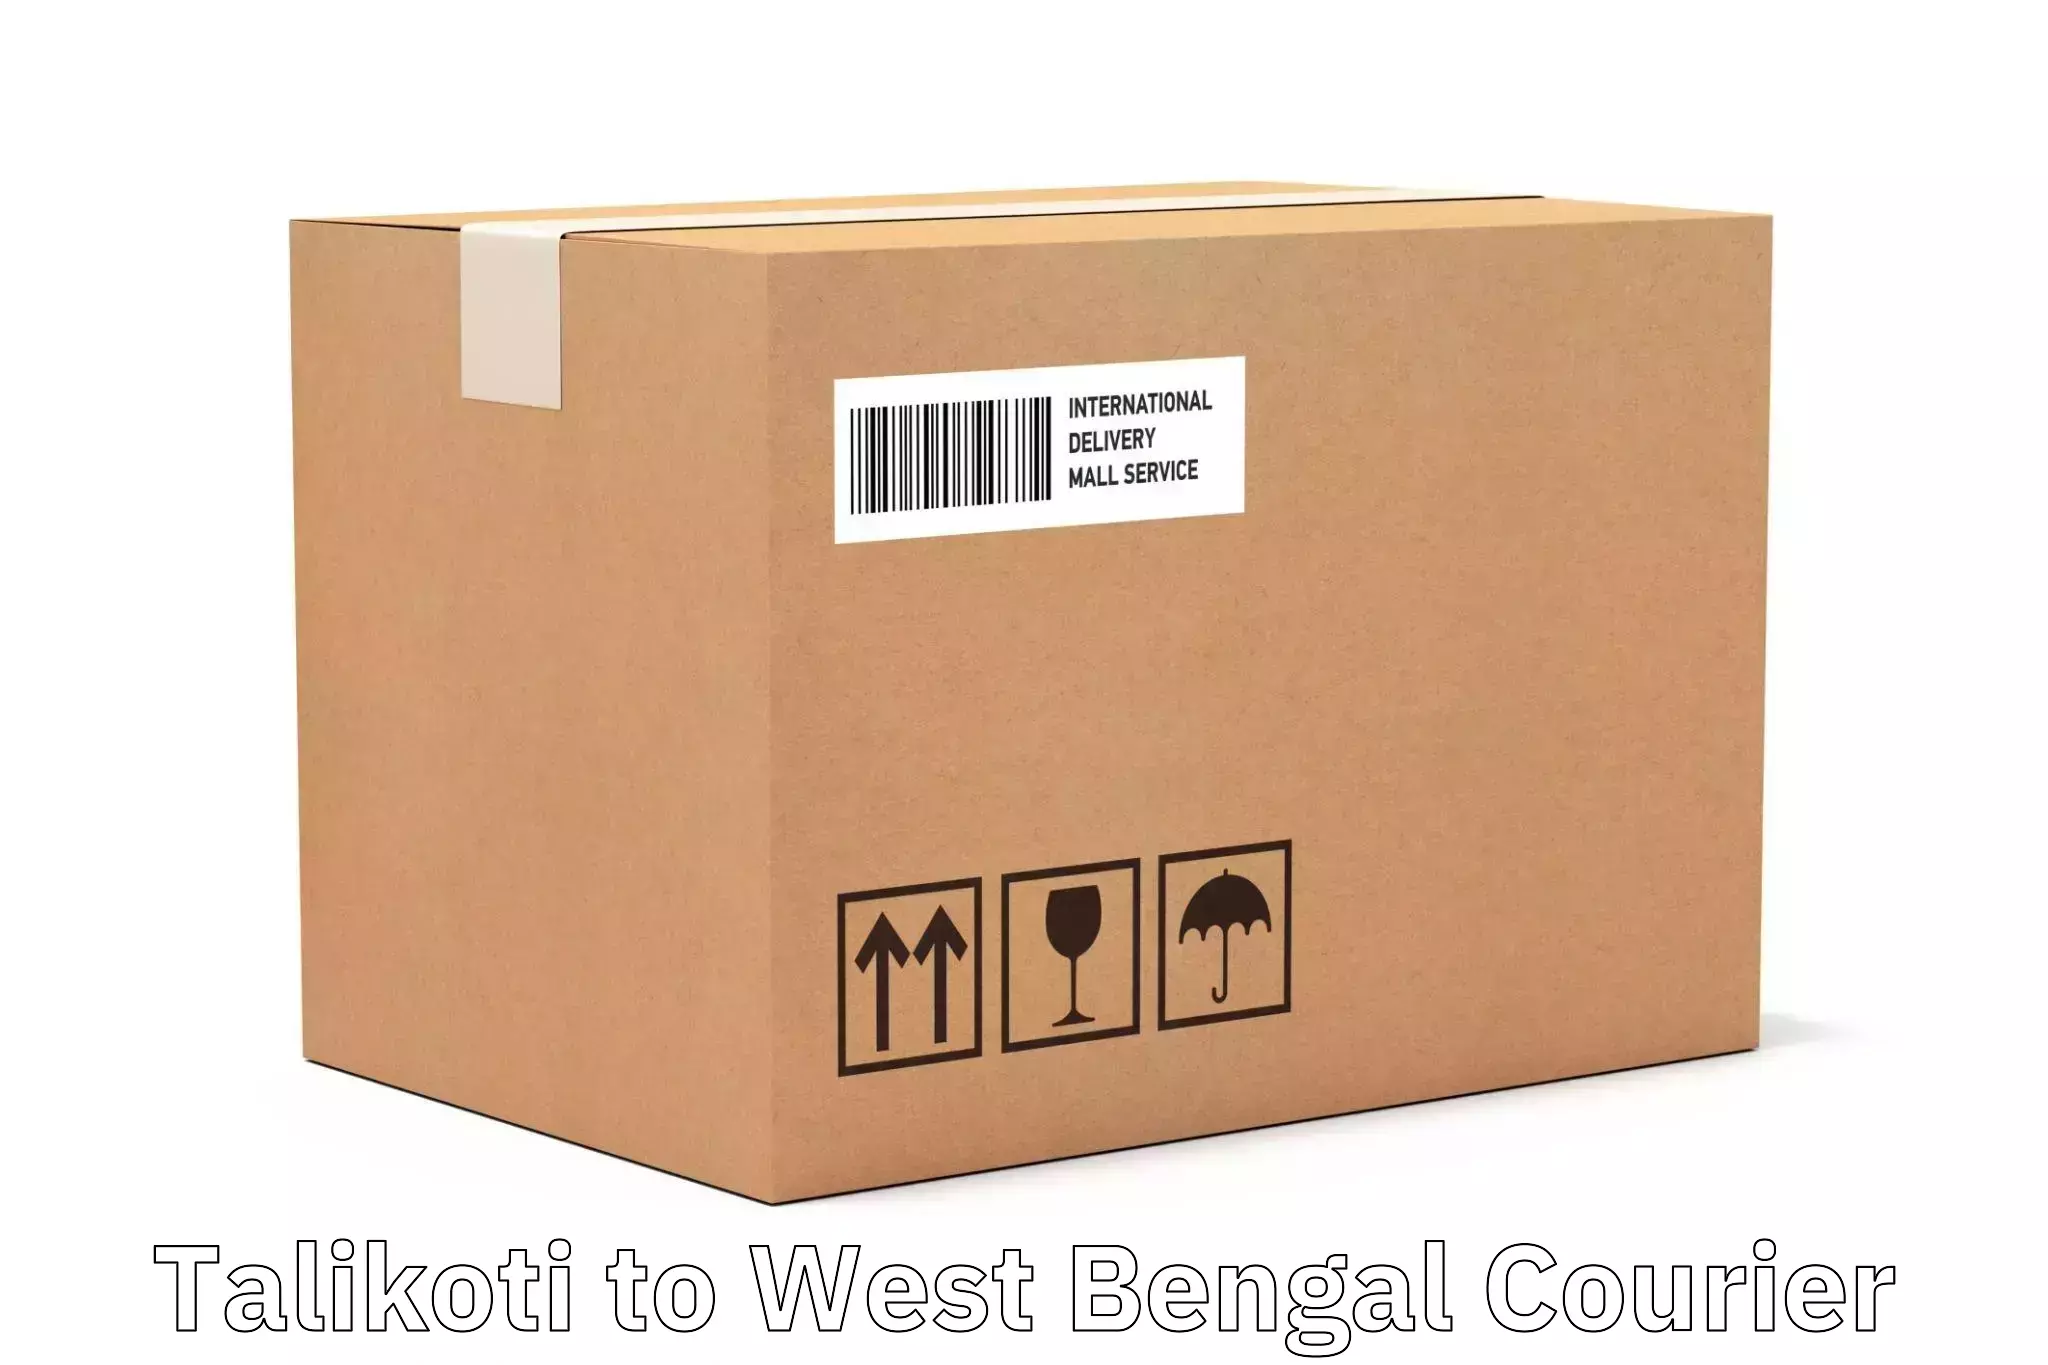 Quick booking process Talikoti to West Bengal